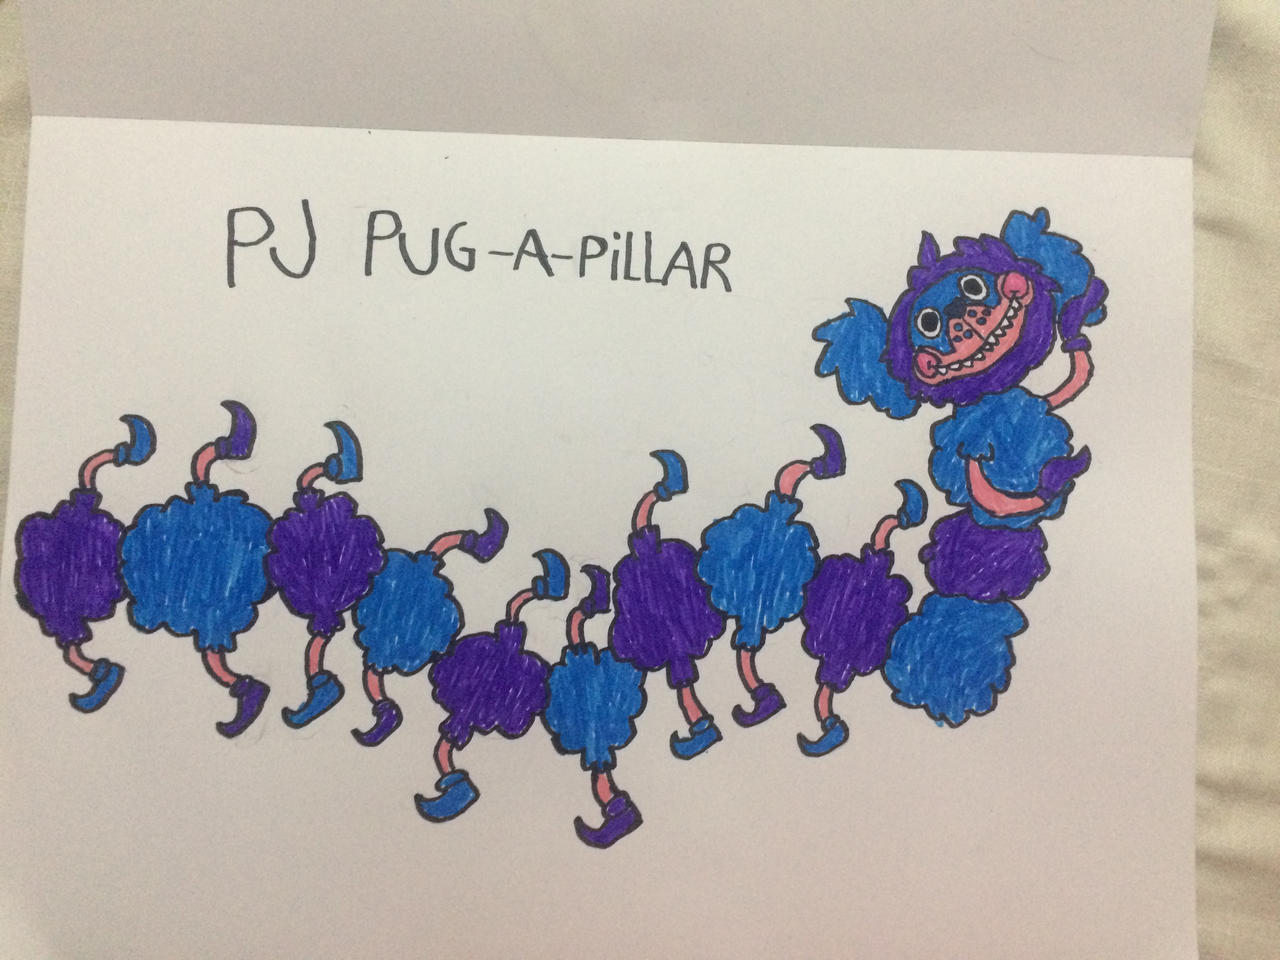 PJ Pug-A-Pillar's Pouncing by rubyrouge649 on DeviantArt